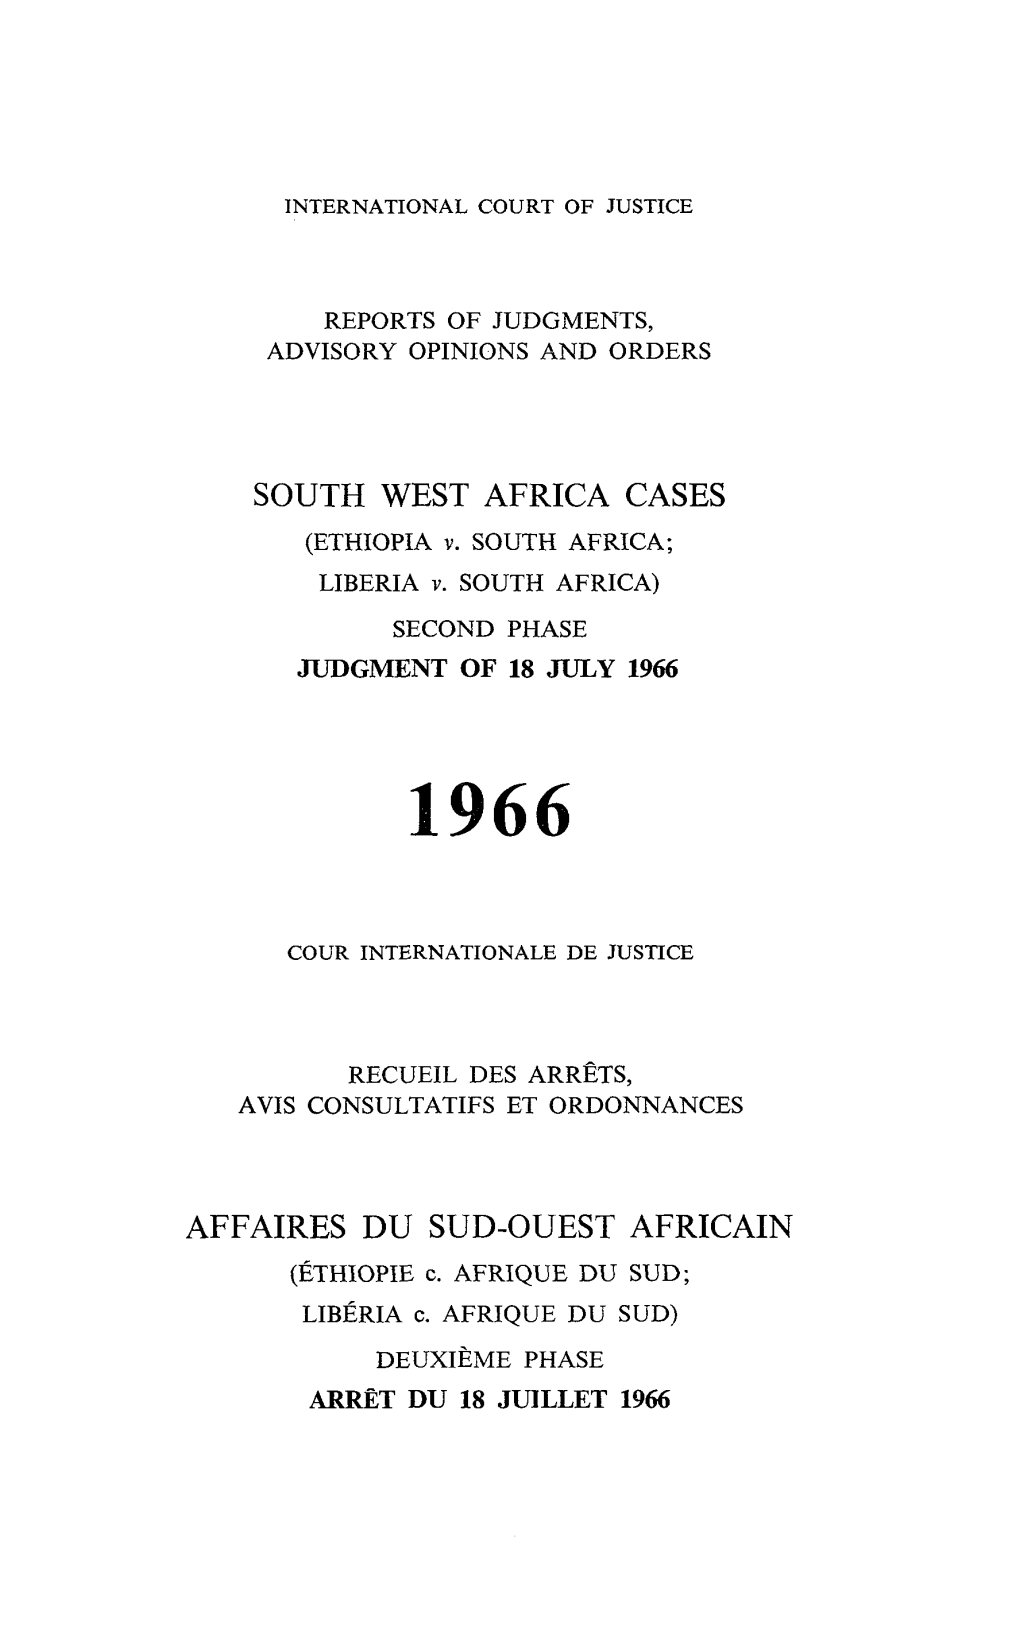 South West Africa Cases Affaires Du Sud-Ouest